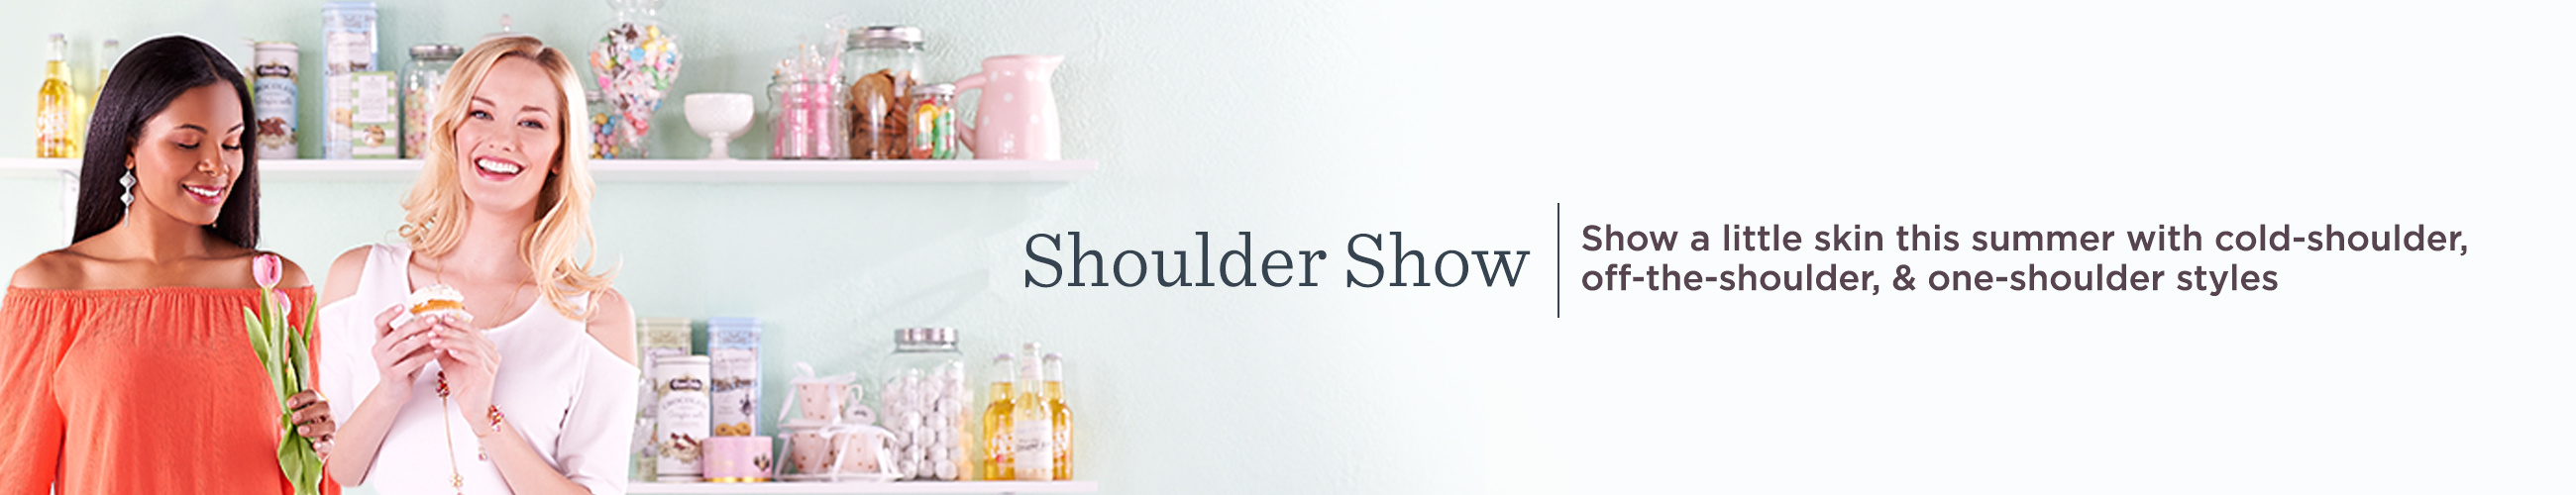 Shoulder Show.  Show a little skin this summer with cold-shoulder, off-the-shoulder, & one-shoulder styles